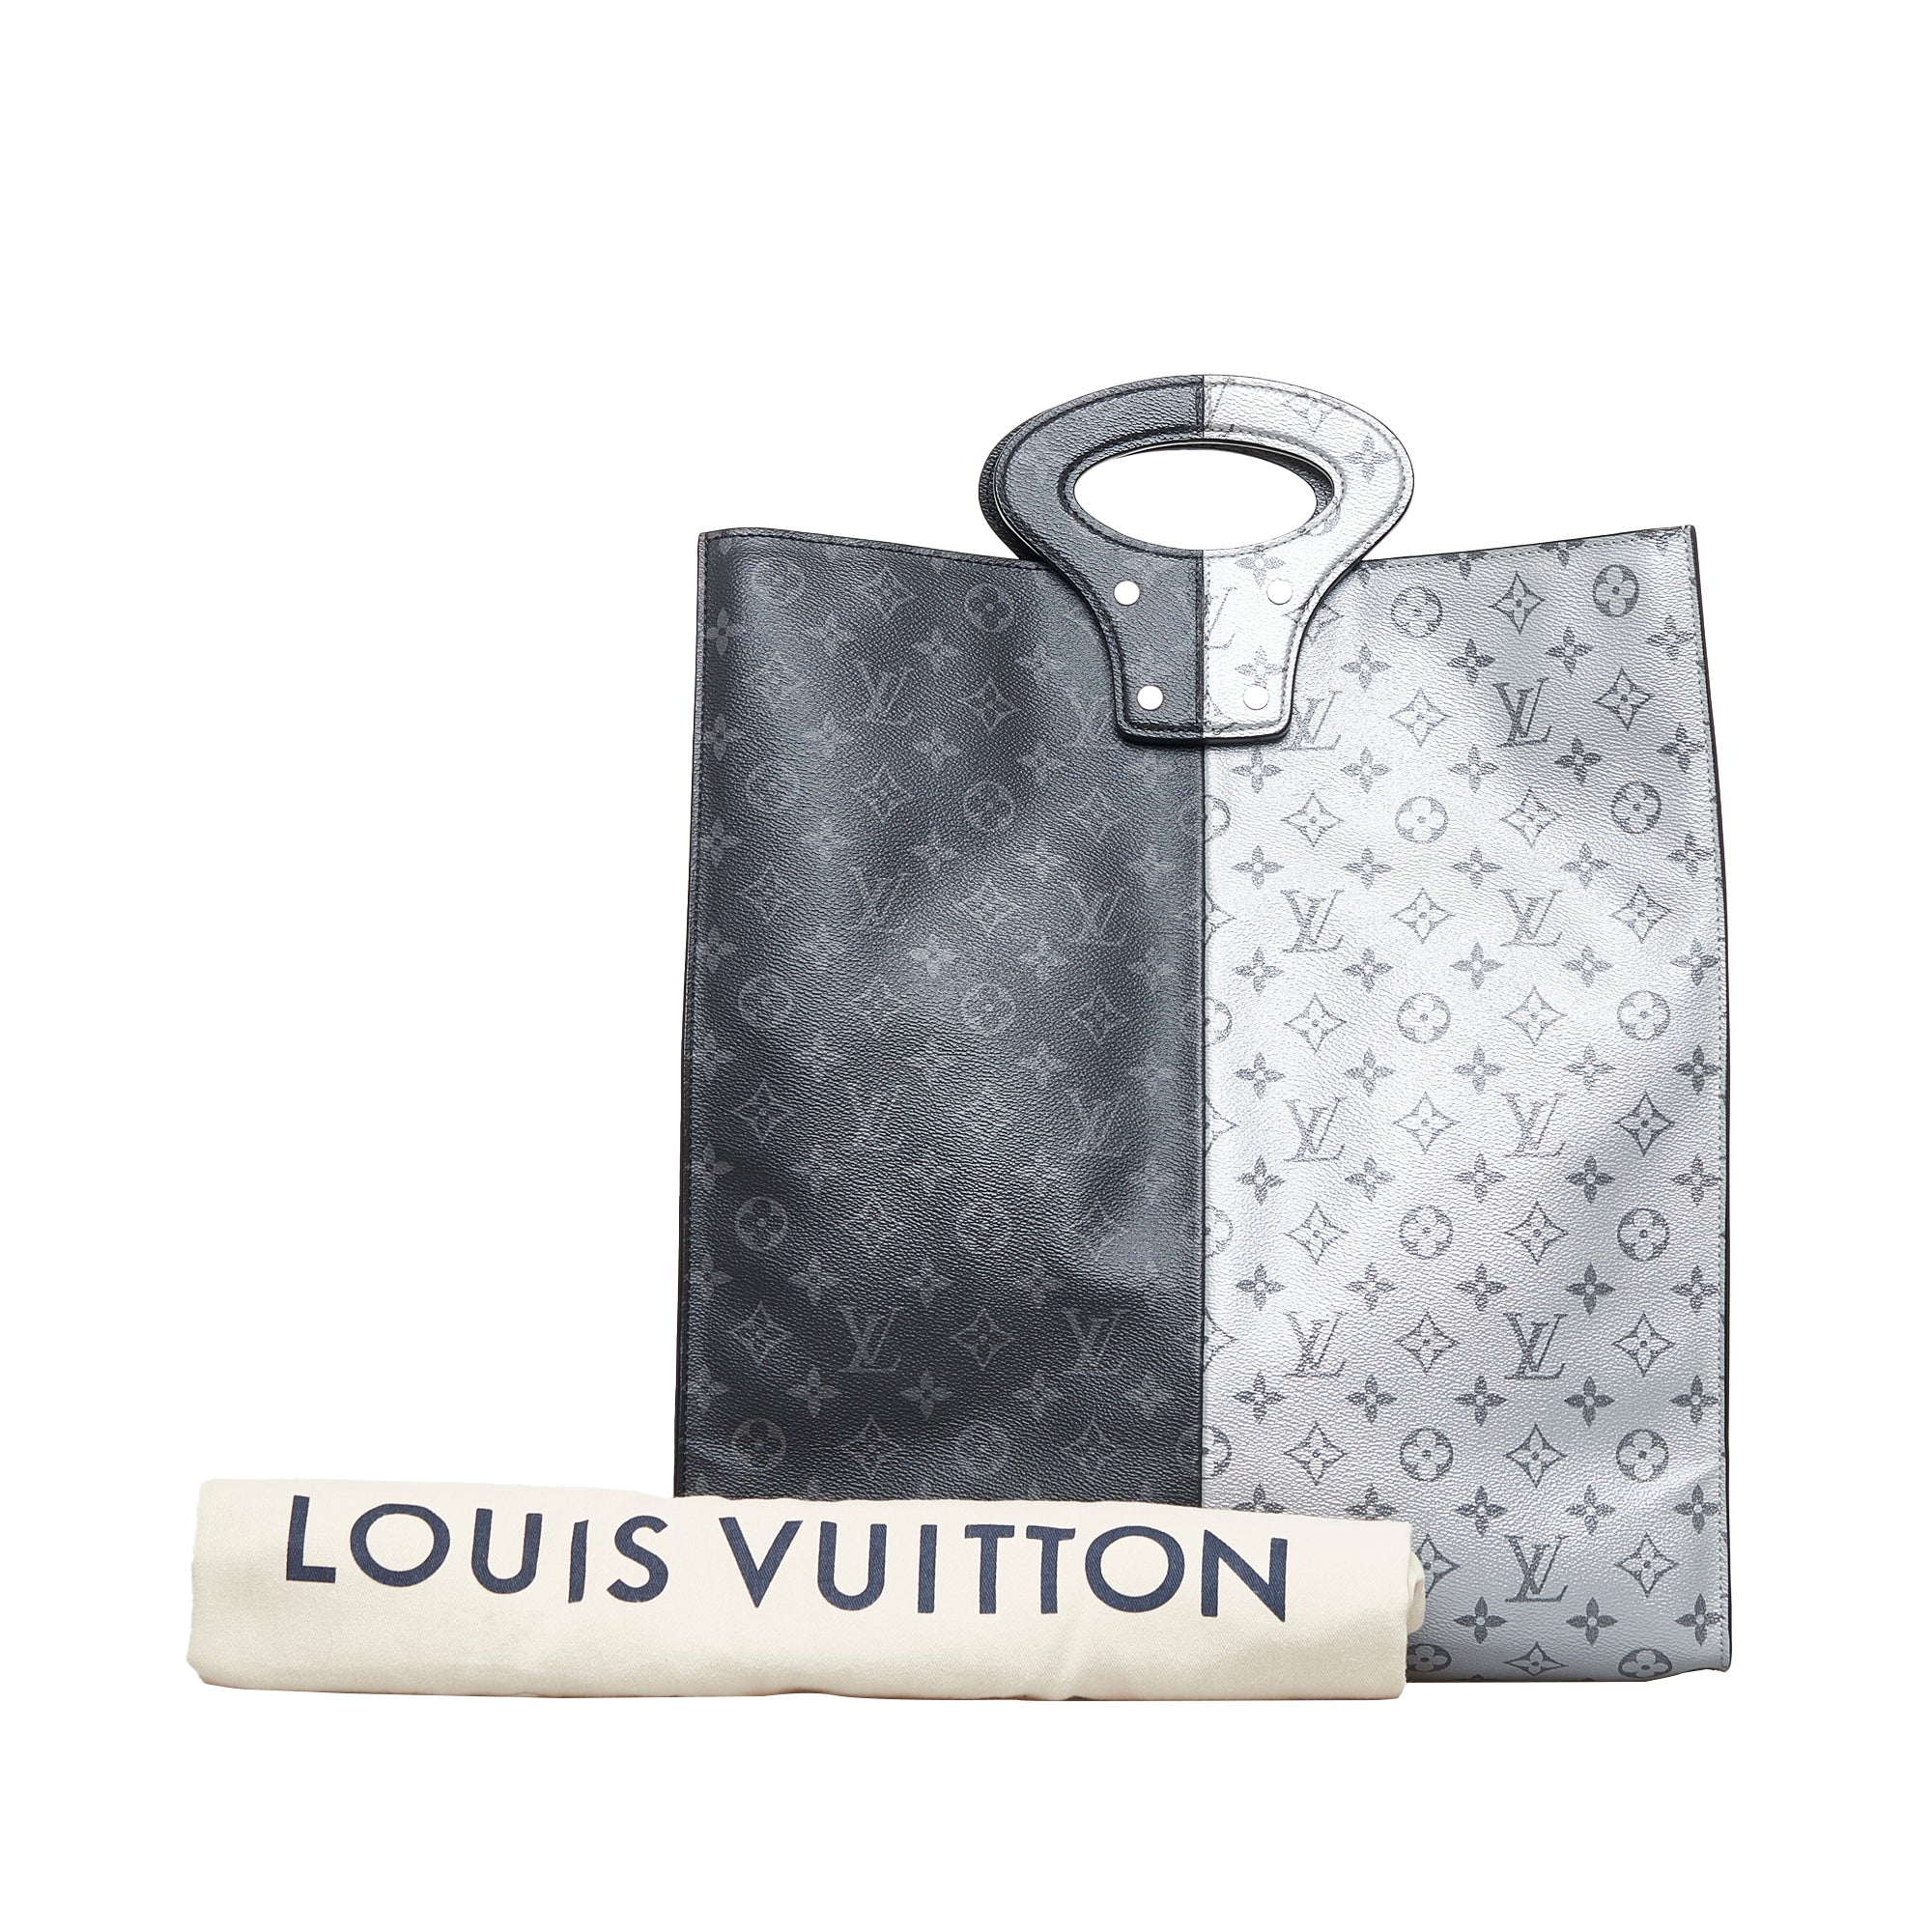 Louis Vuitton - Authenticated Monogram Split Tote Bag - Cloth Black for Men, Very Good Condition